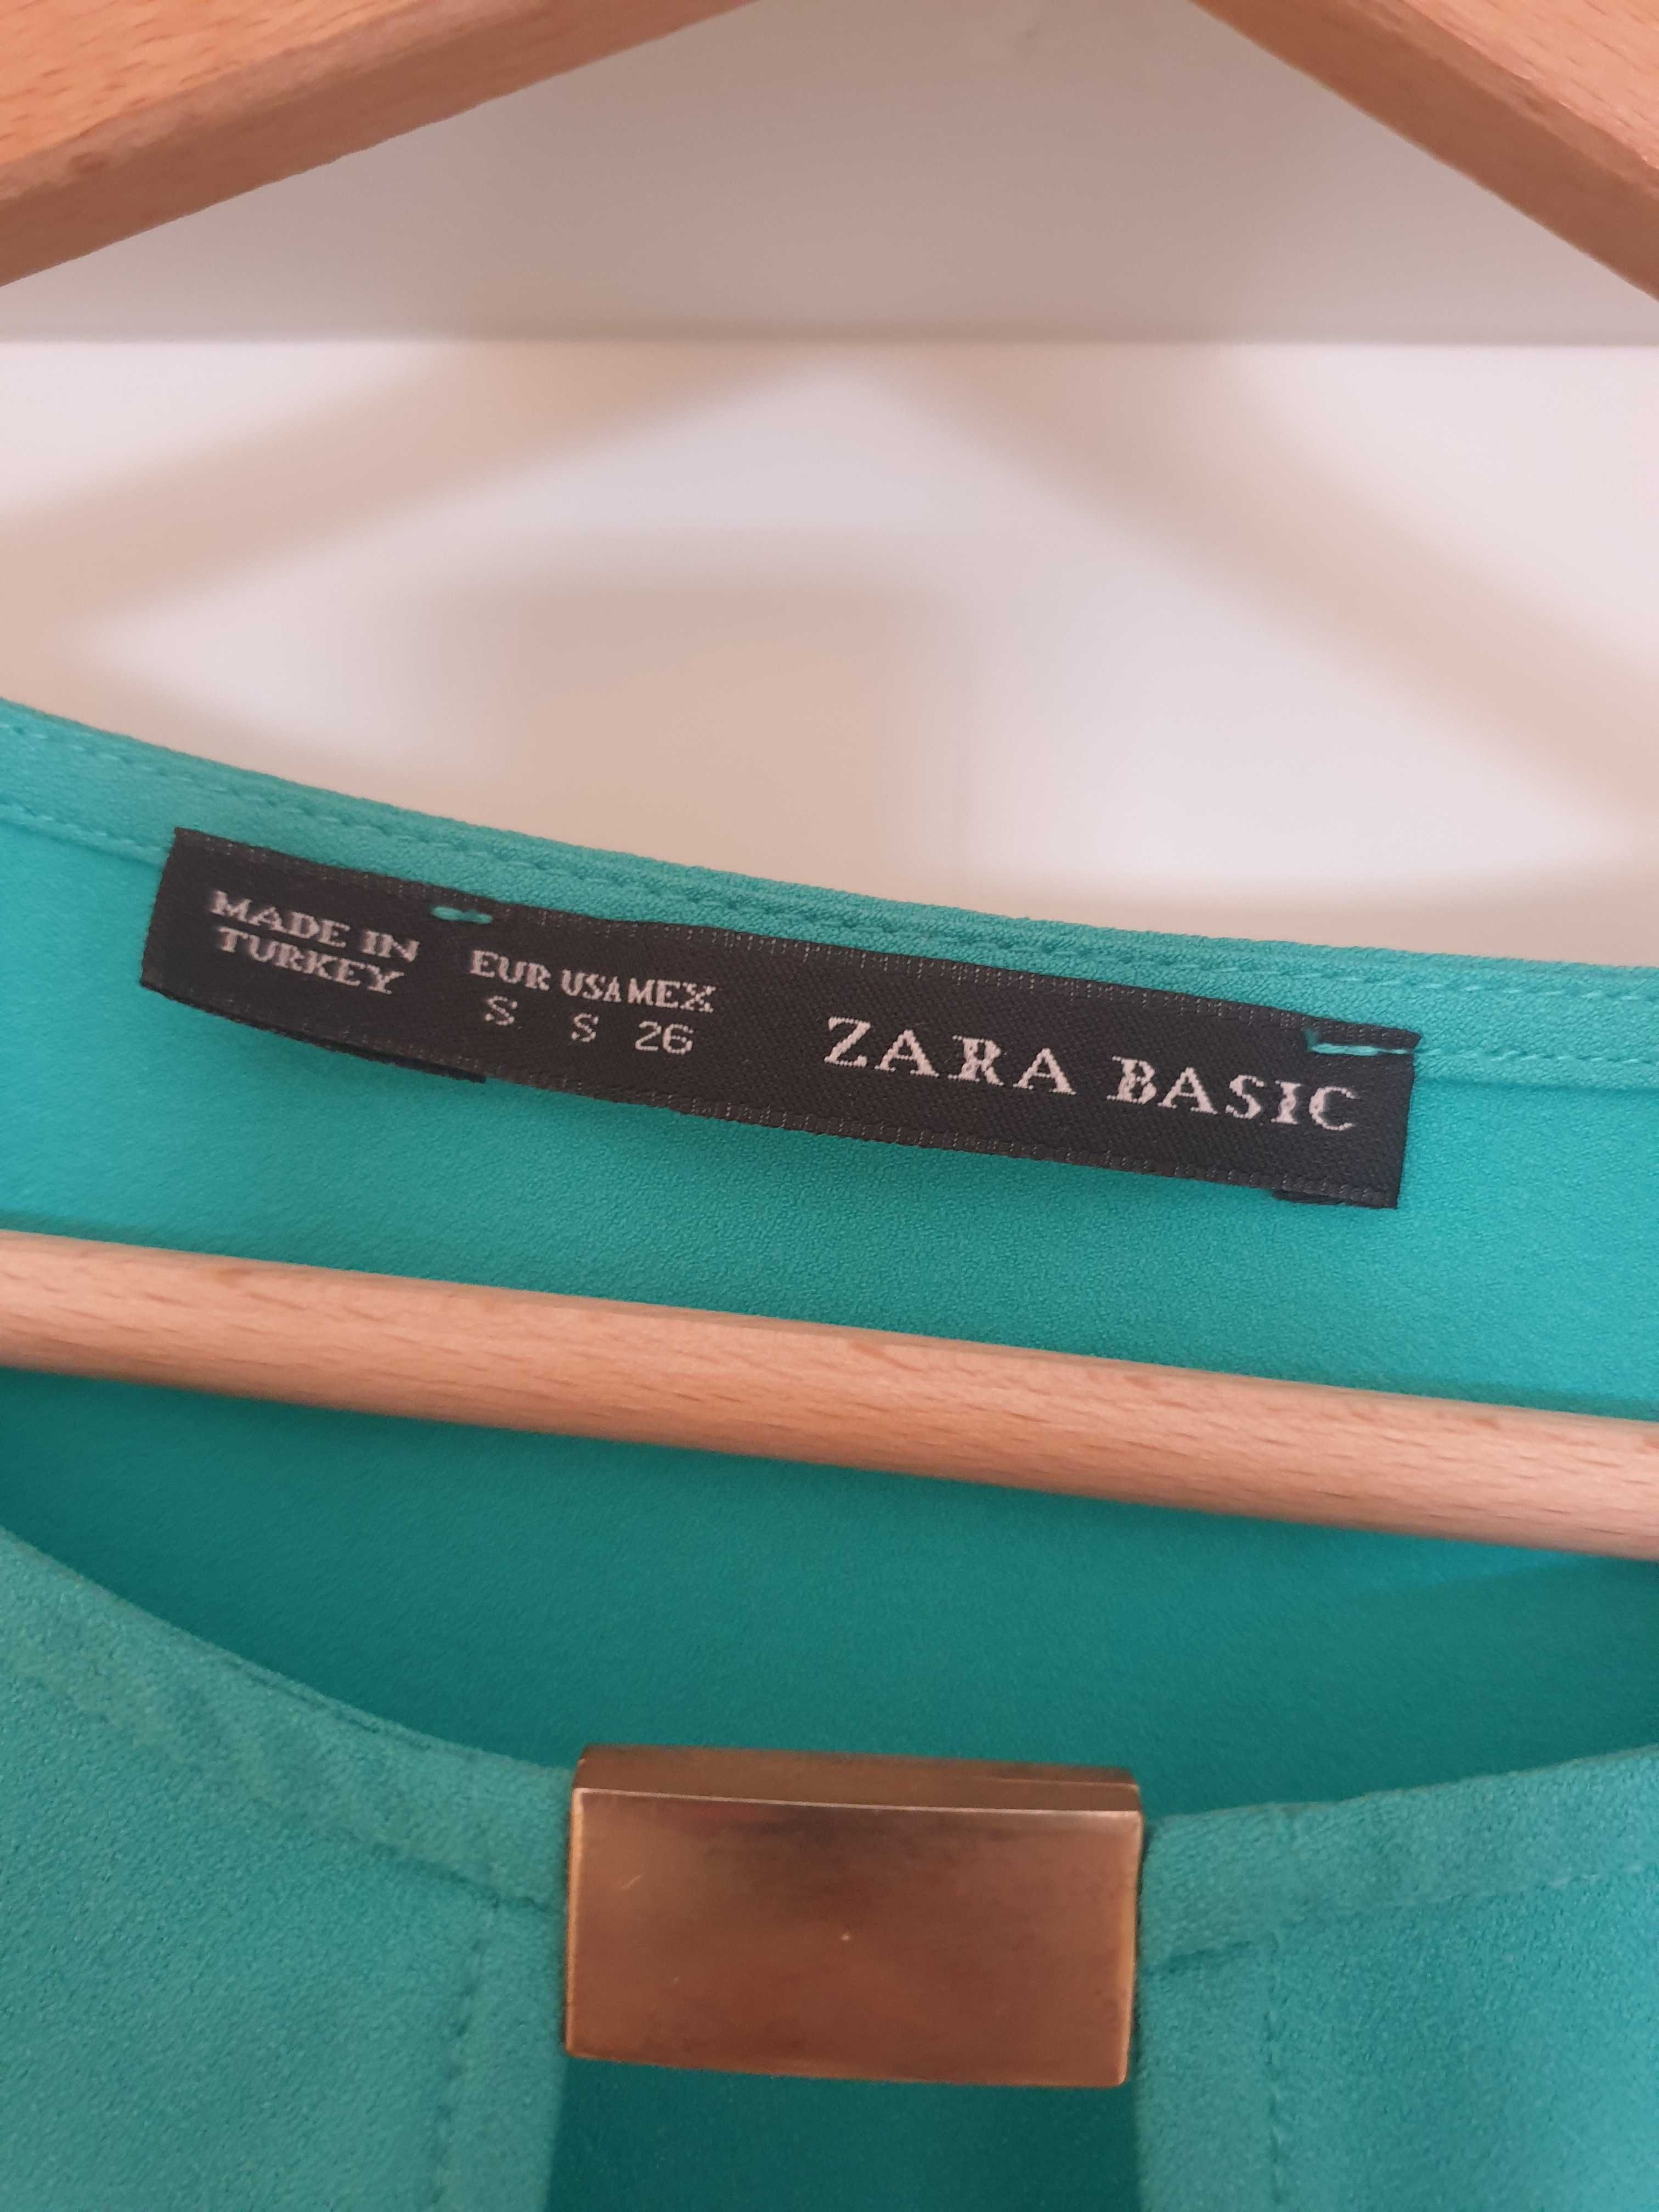 Blusa/top azul turquesa/verde Zara